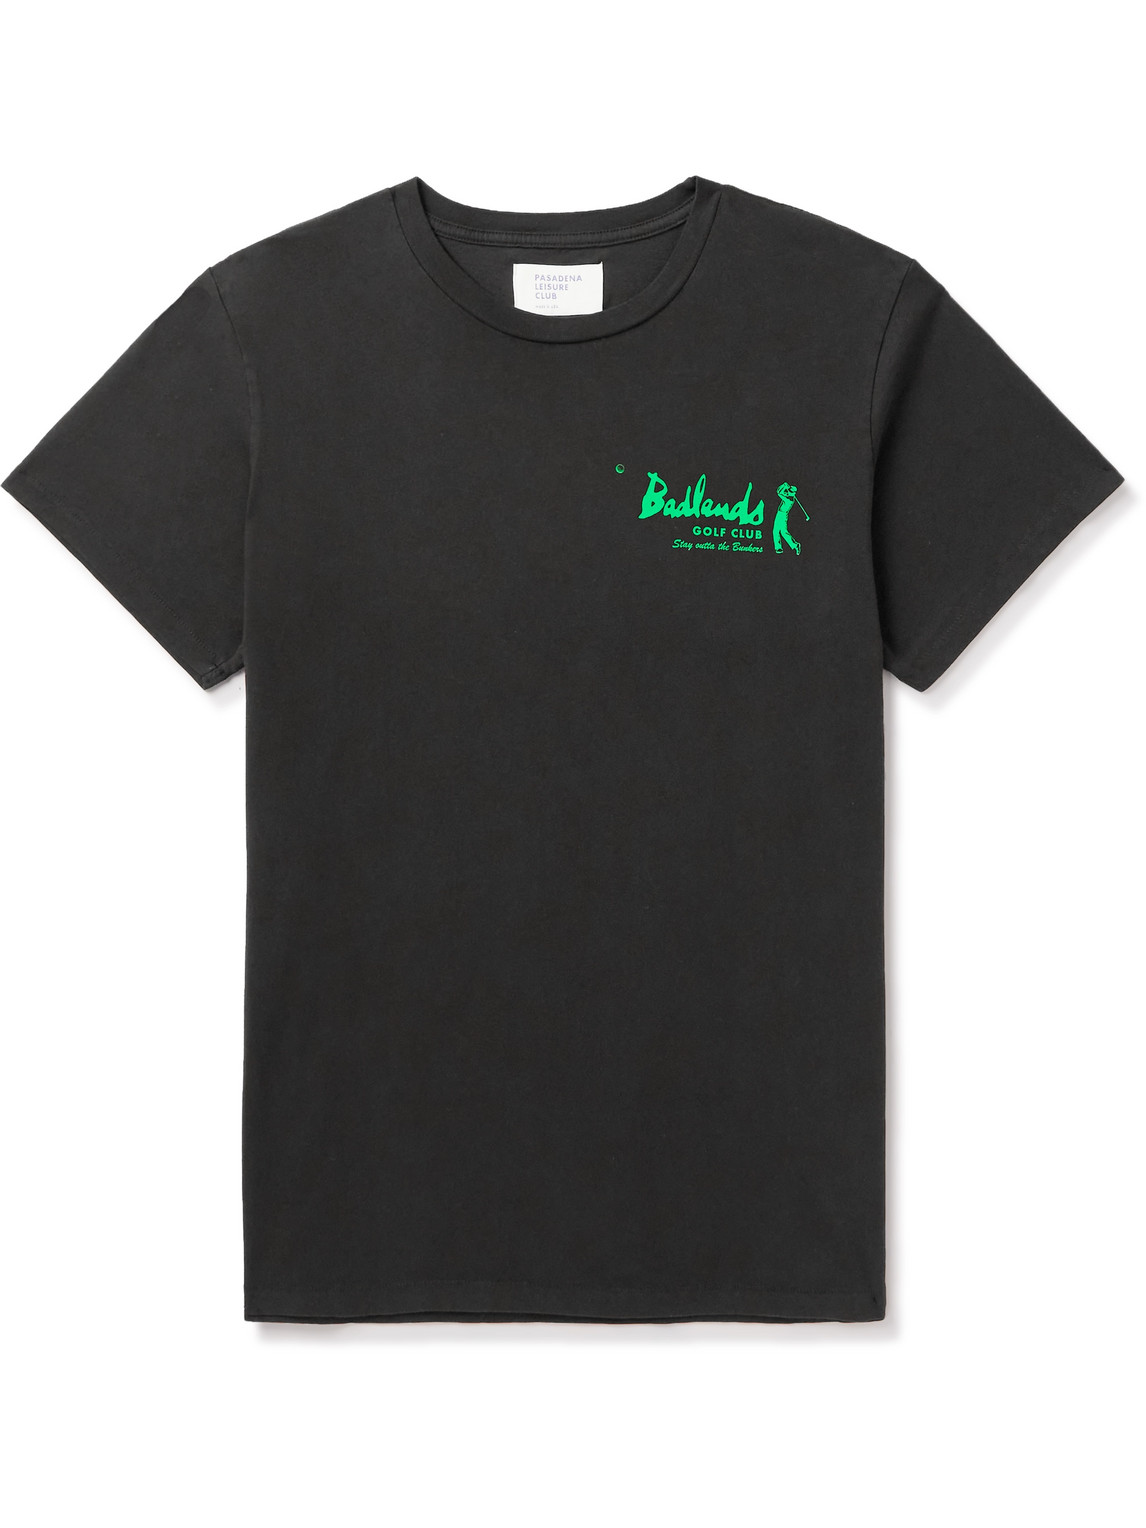 Pasadena Leisure Club Badlands Printed Cotton-jersey T-shirt In Black